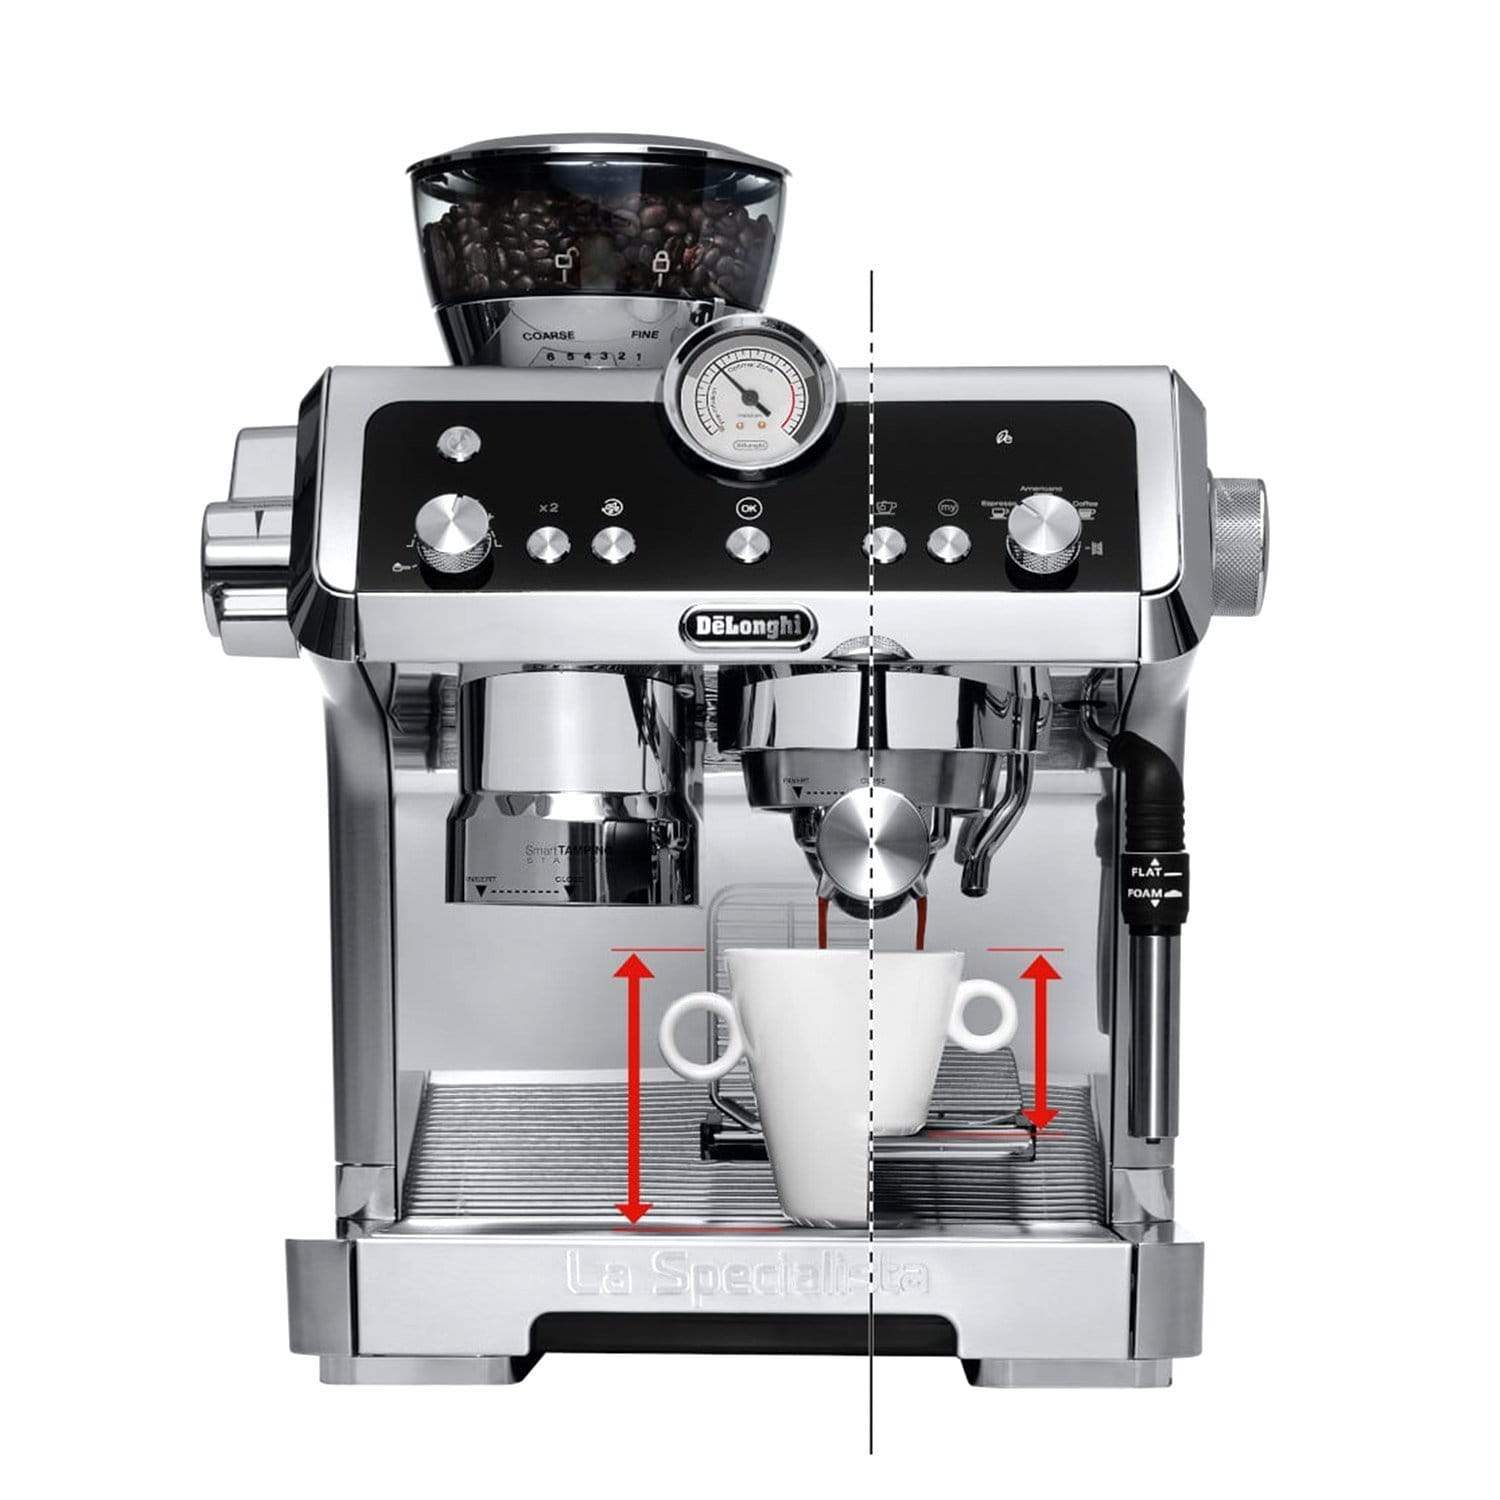 De'Longhi ماكينة تحضير القهوة بمضخة لا سبيشاليكا - فضي - EC9335. م - جاشنمال هوم